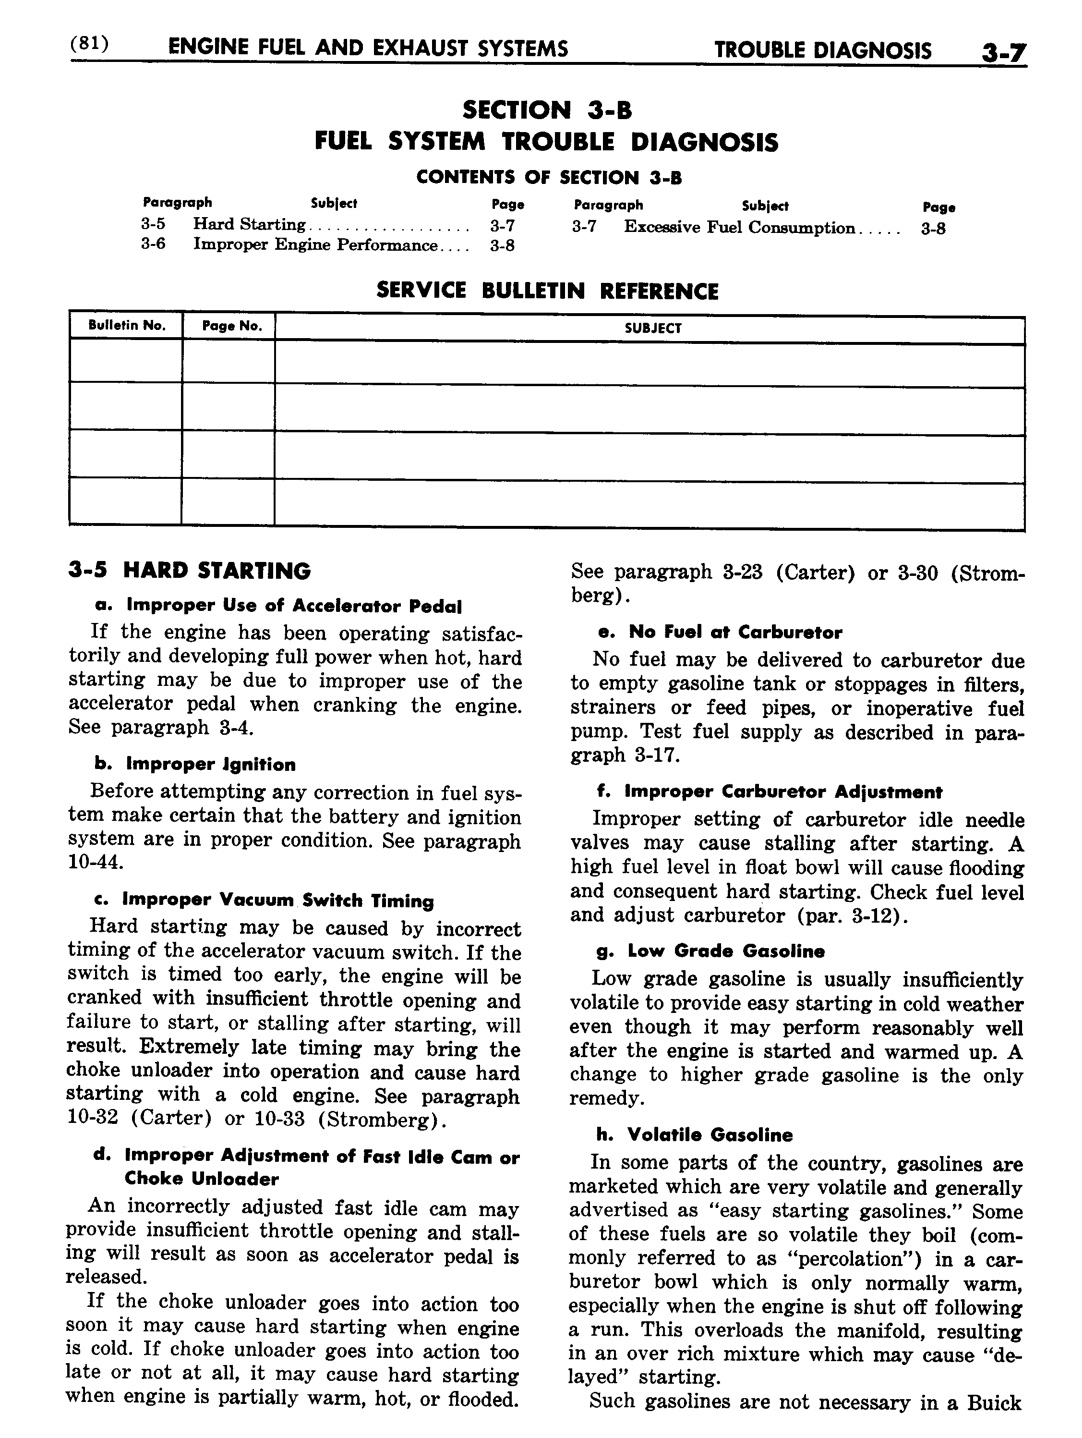 n_04 1948 Buick Shop Manual - Engine Fuel & Exhaust-007-007.jpg